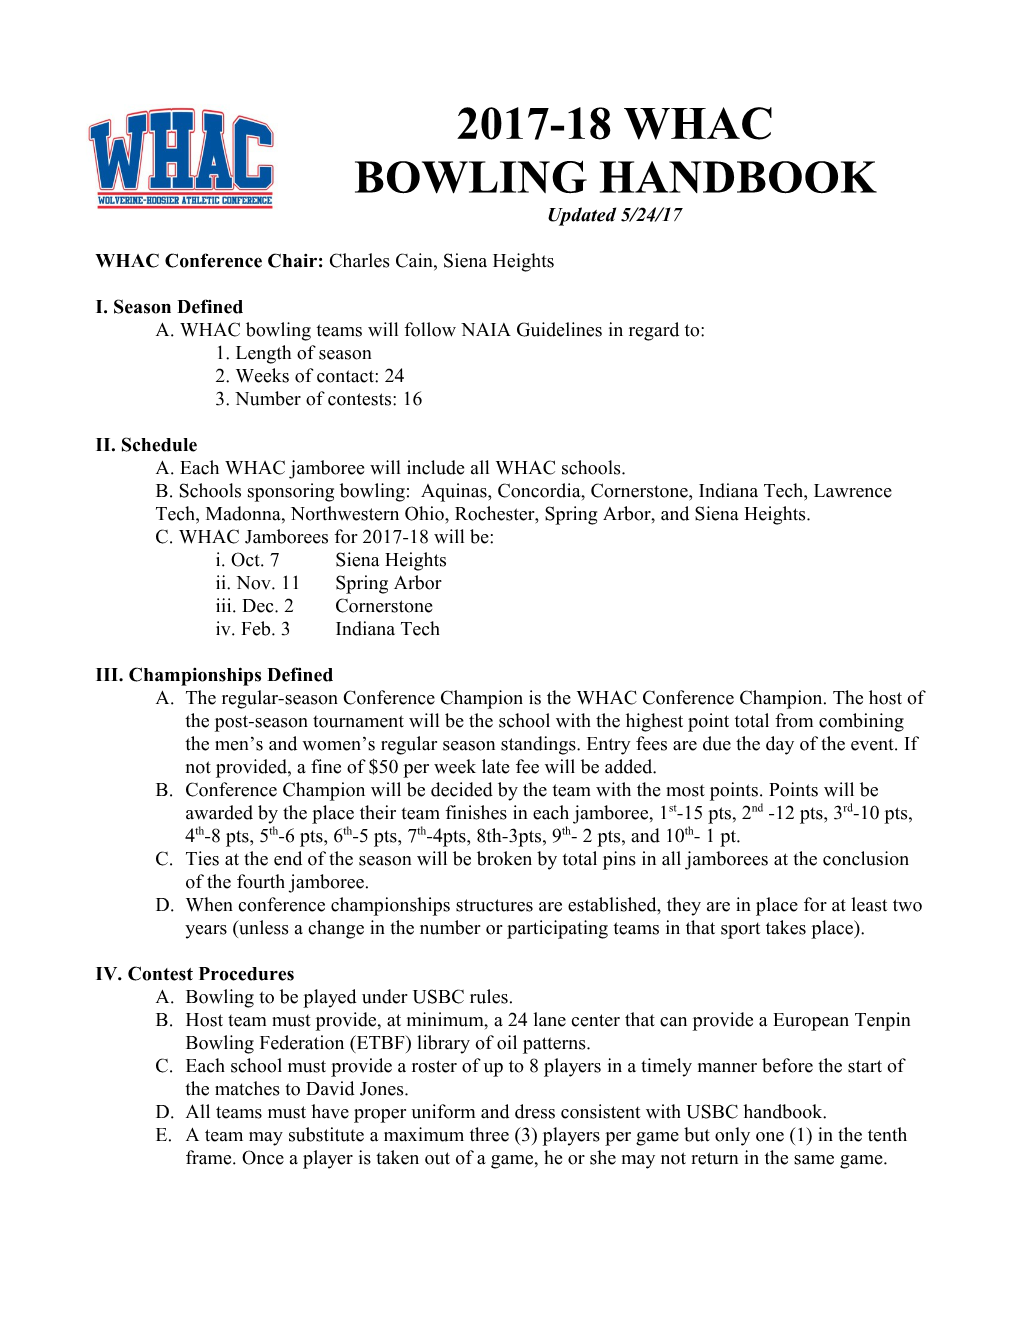 2008-09 Whac Handbook Sid